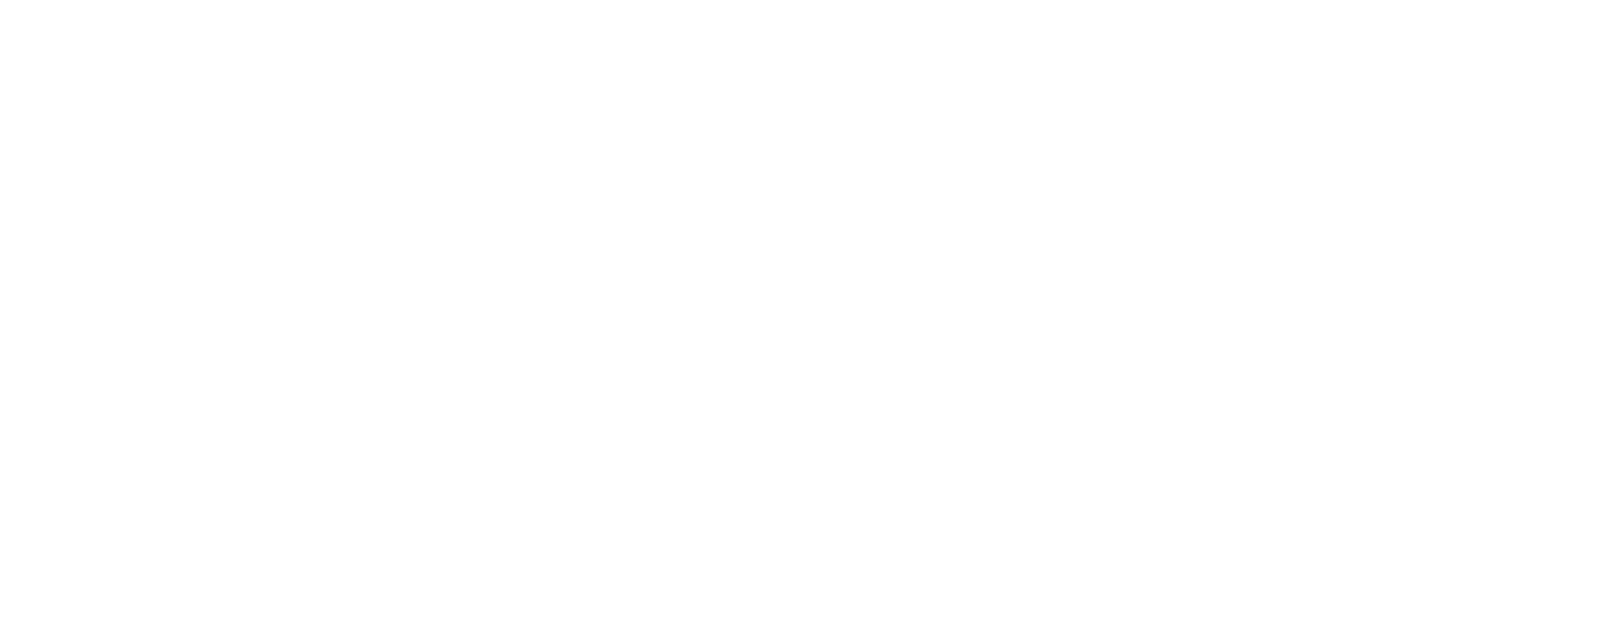 eBay logo pour fonds sombres (PNG transparent)